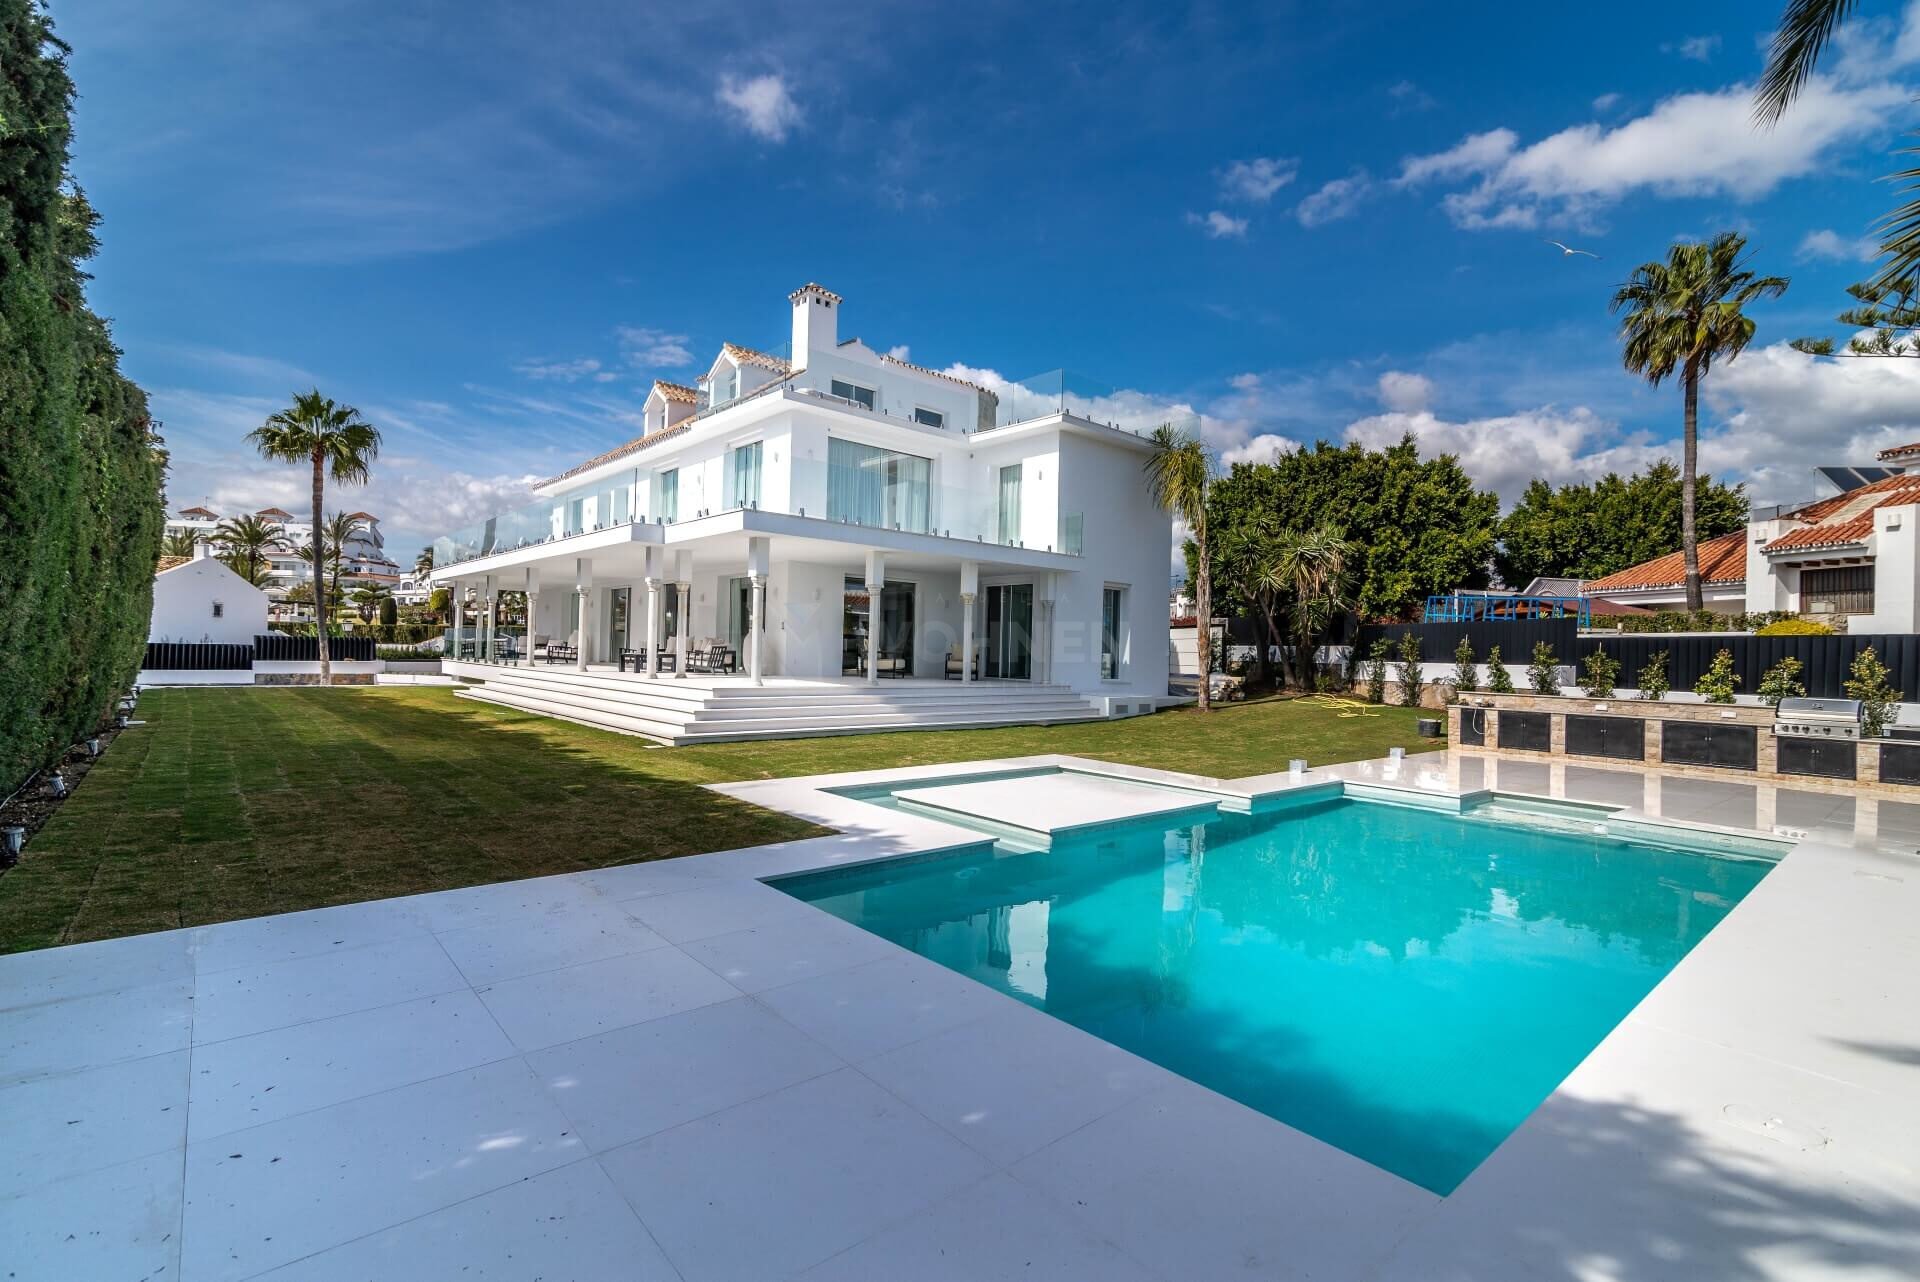 Impressive villa with sea views just a few minutes’ walk from Puerto Banús